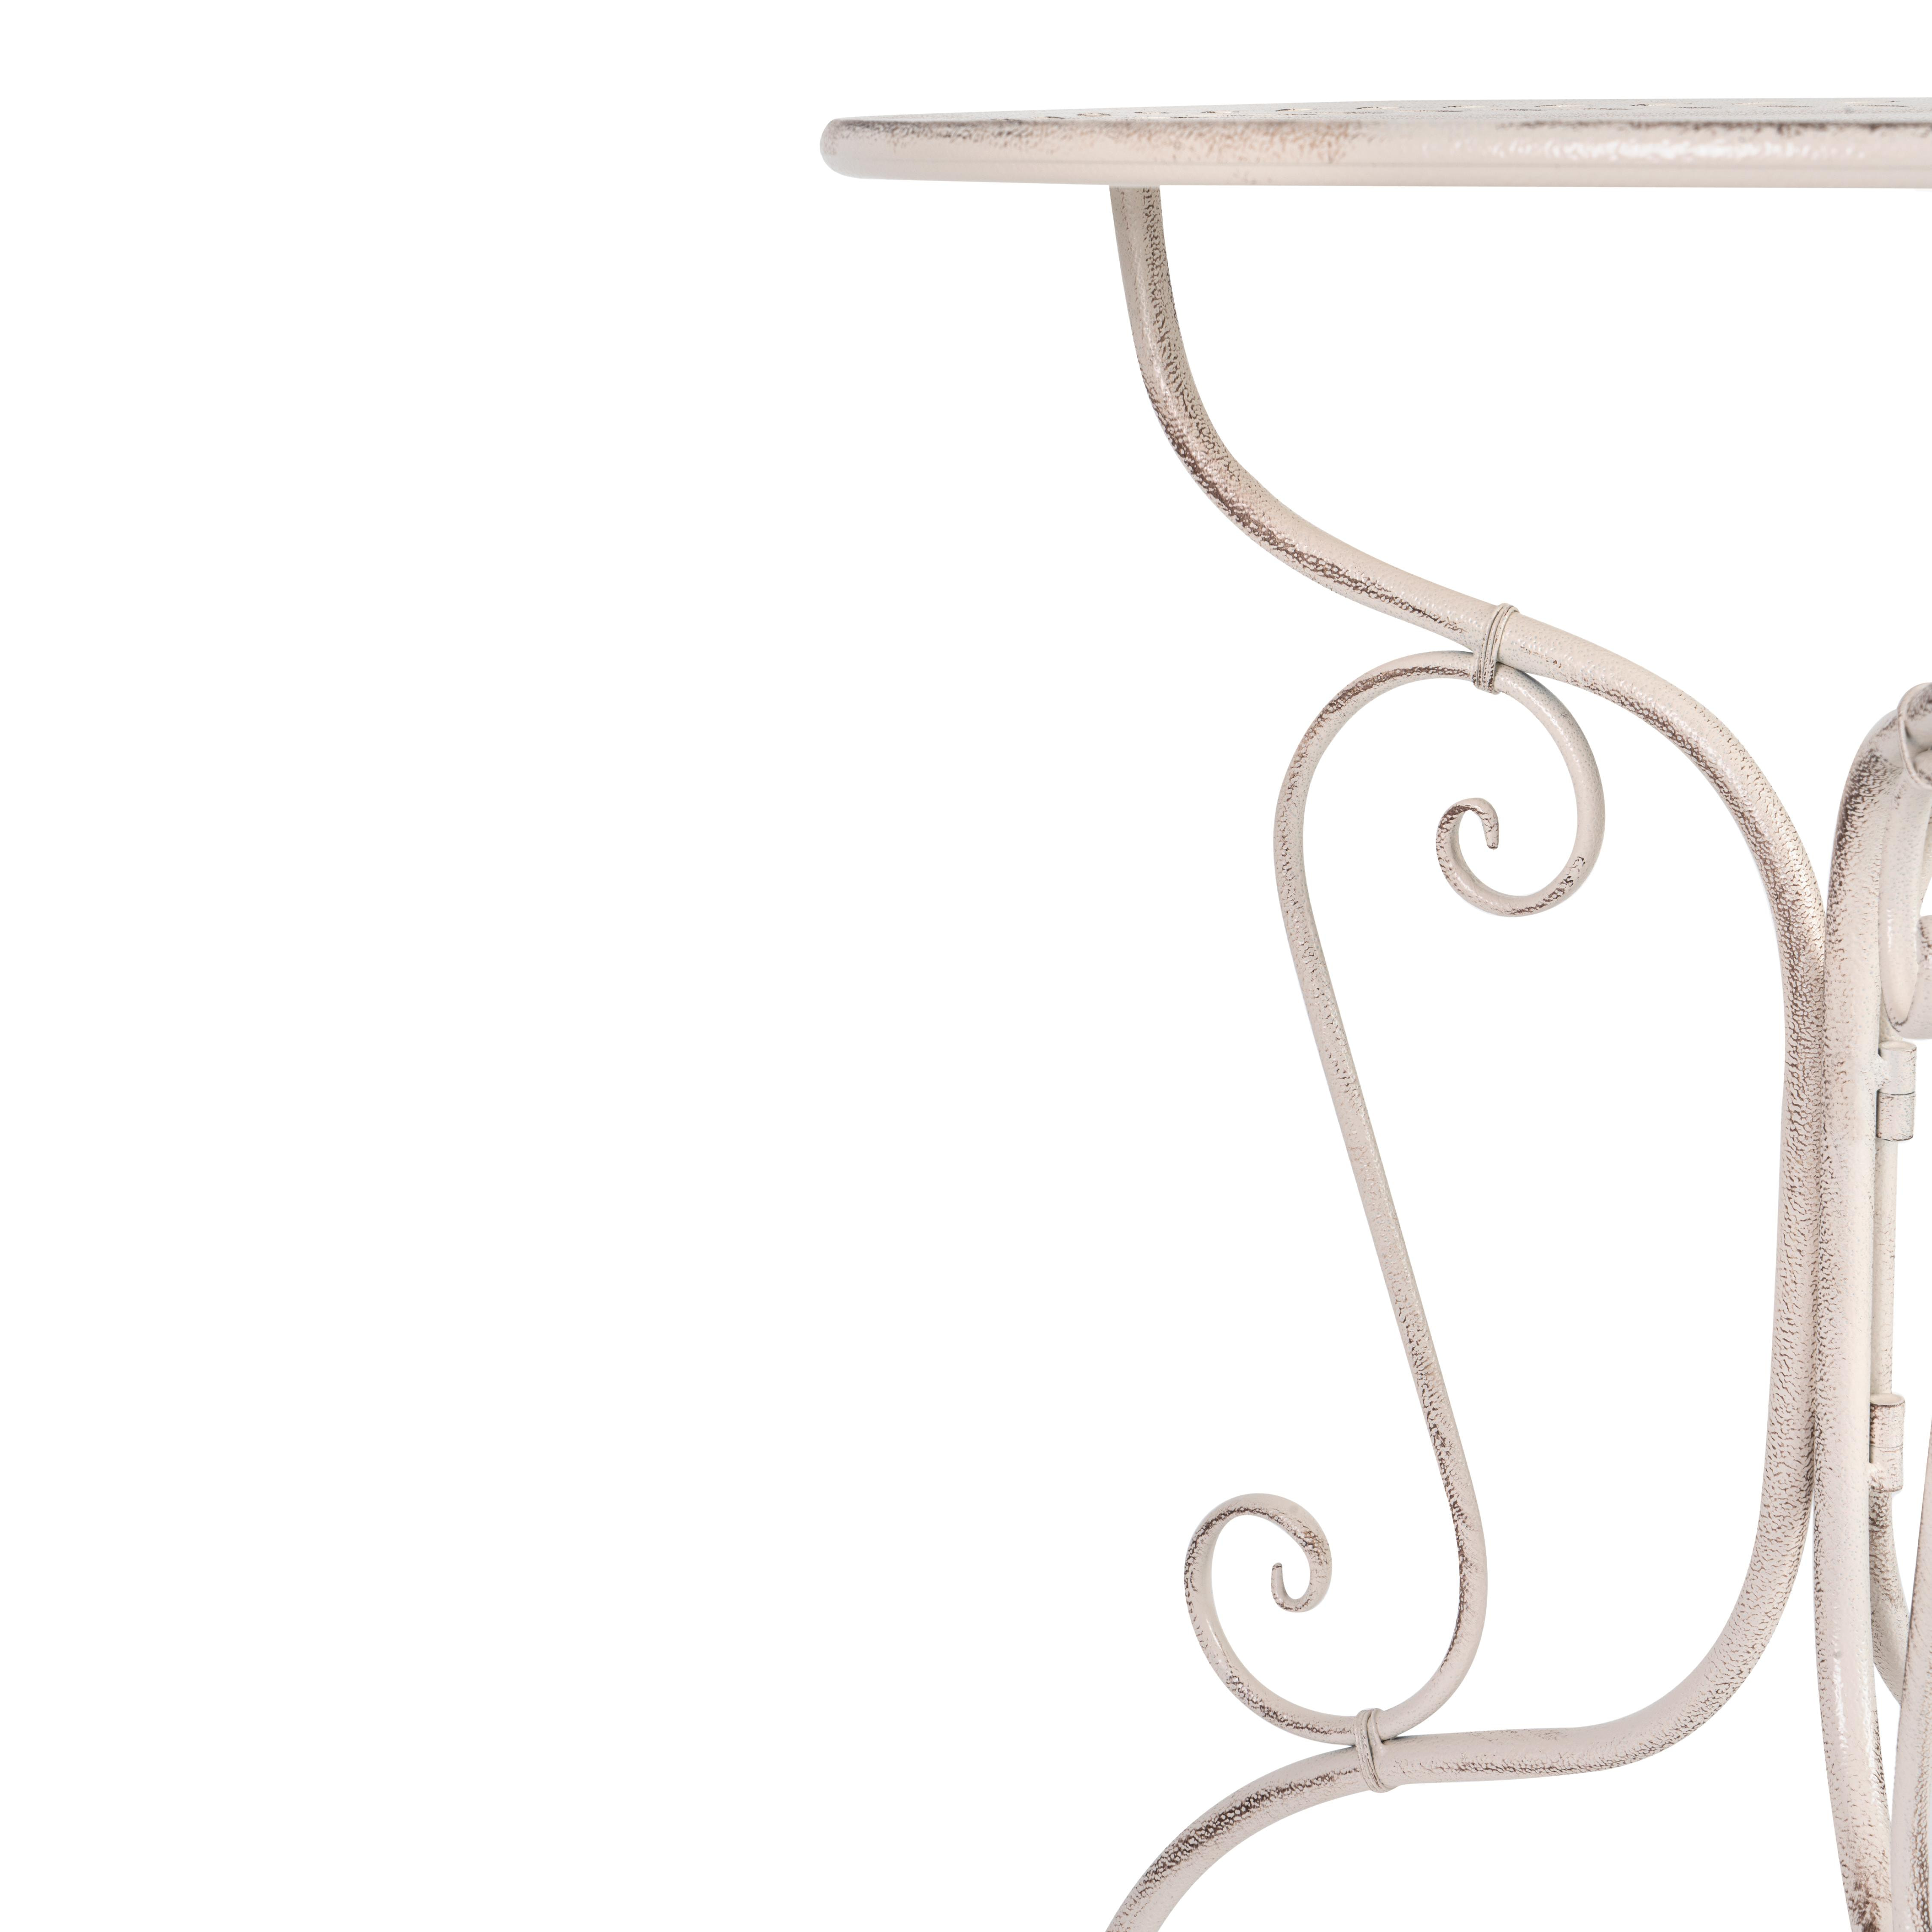 Комплект (стол + 2 стула) Secret de Maison Monique (mod. PL08-6241.6242) металл, стол:62*73, стул: 48*40*93, Античный белый (Antique White)